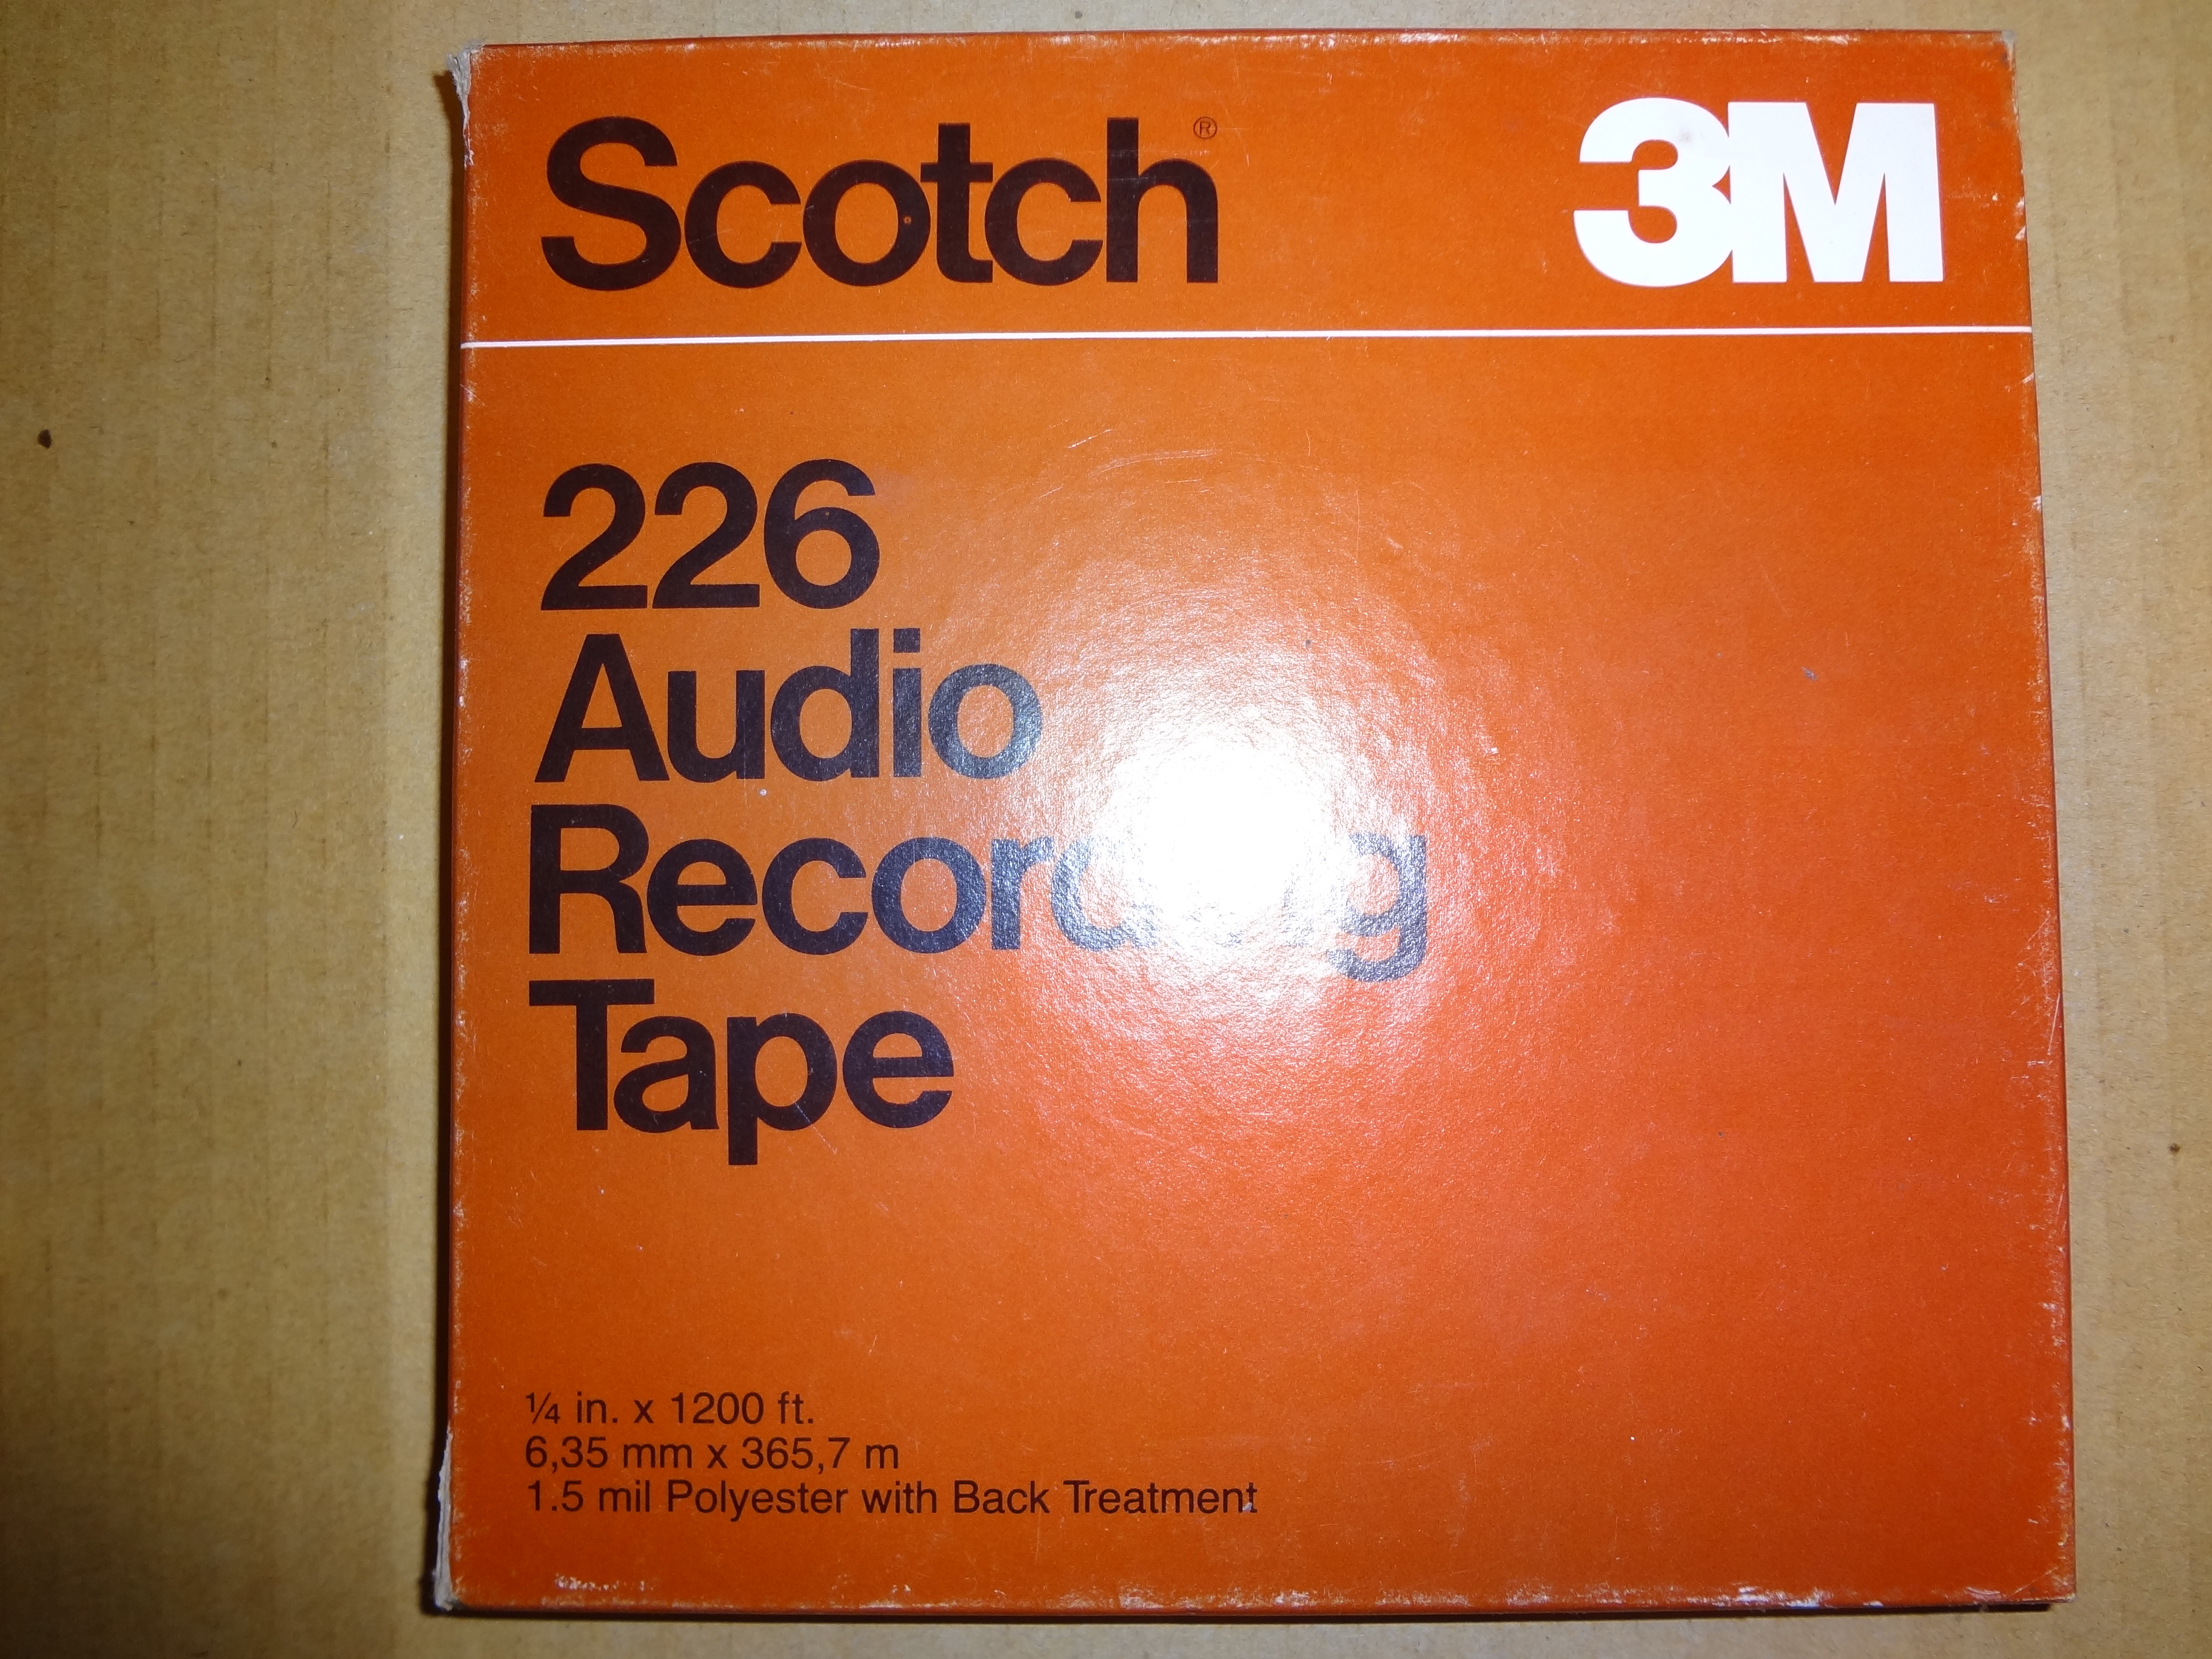 Scotch 3M 226 Audio Recording Tape reel to reel 1:4 in x 1200 ft | REEL ...